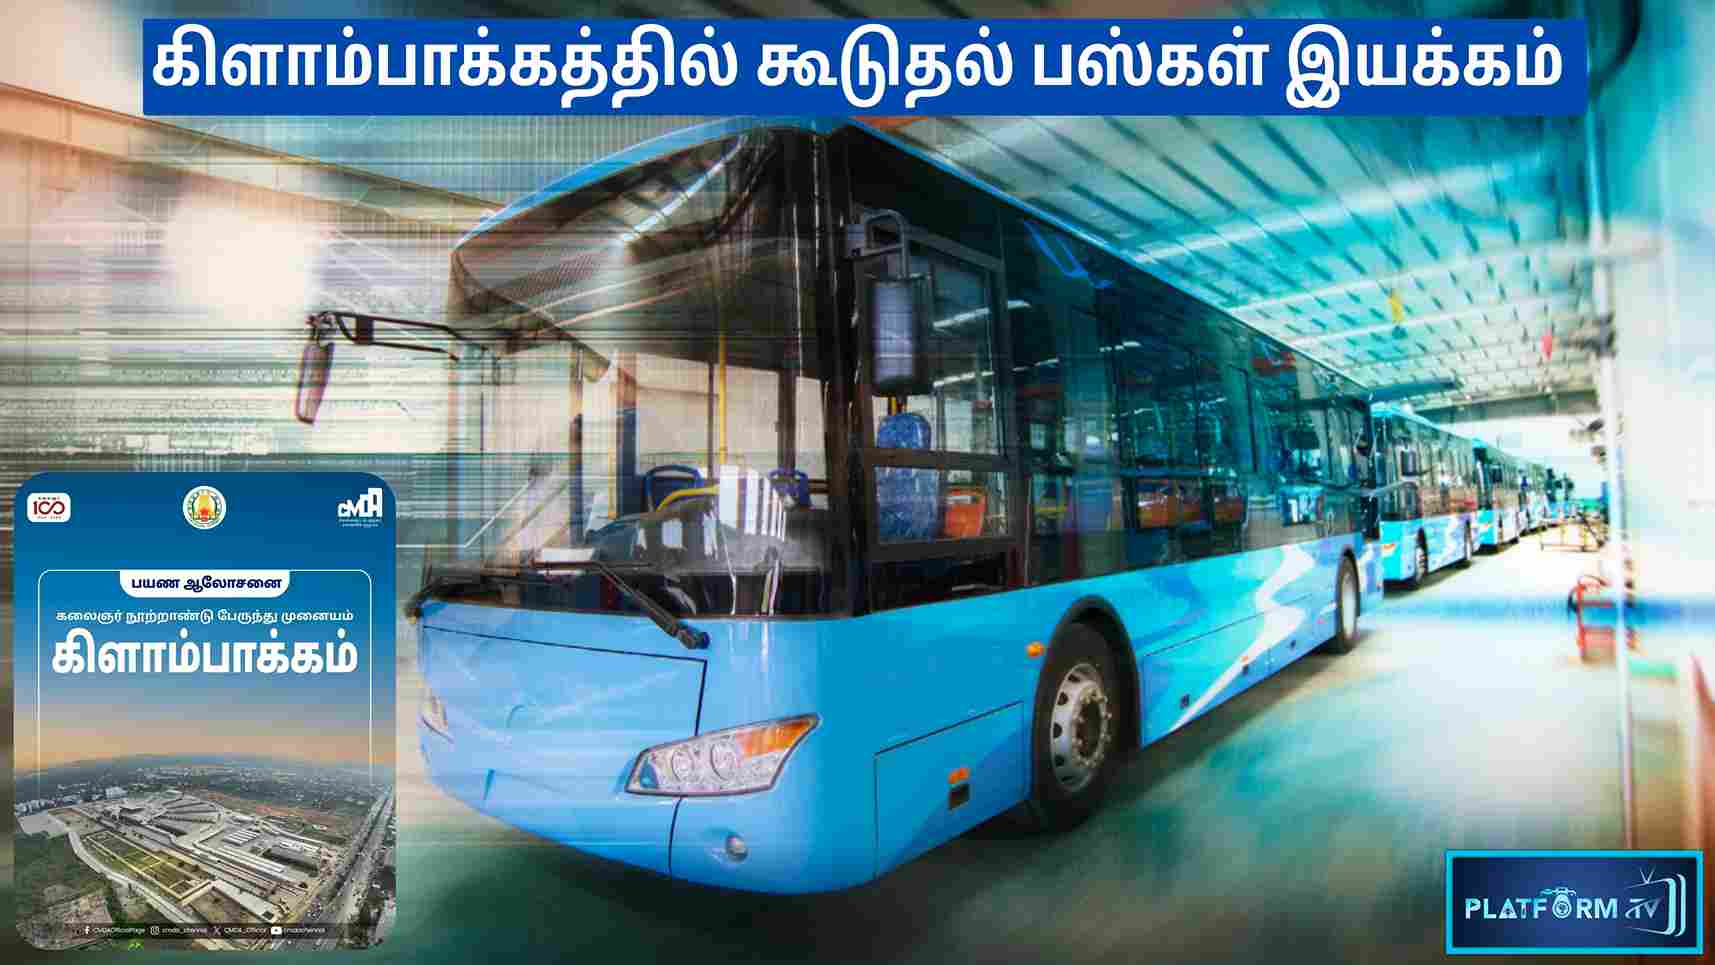 Operation Of Additional Buses - Platform Tamil